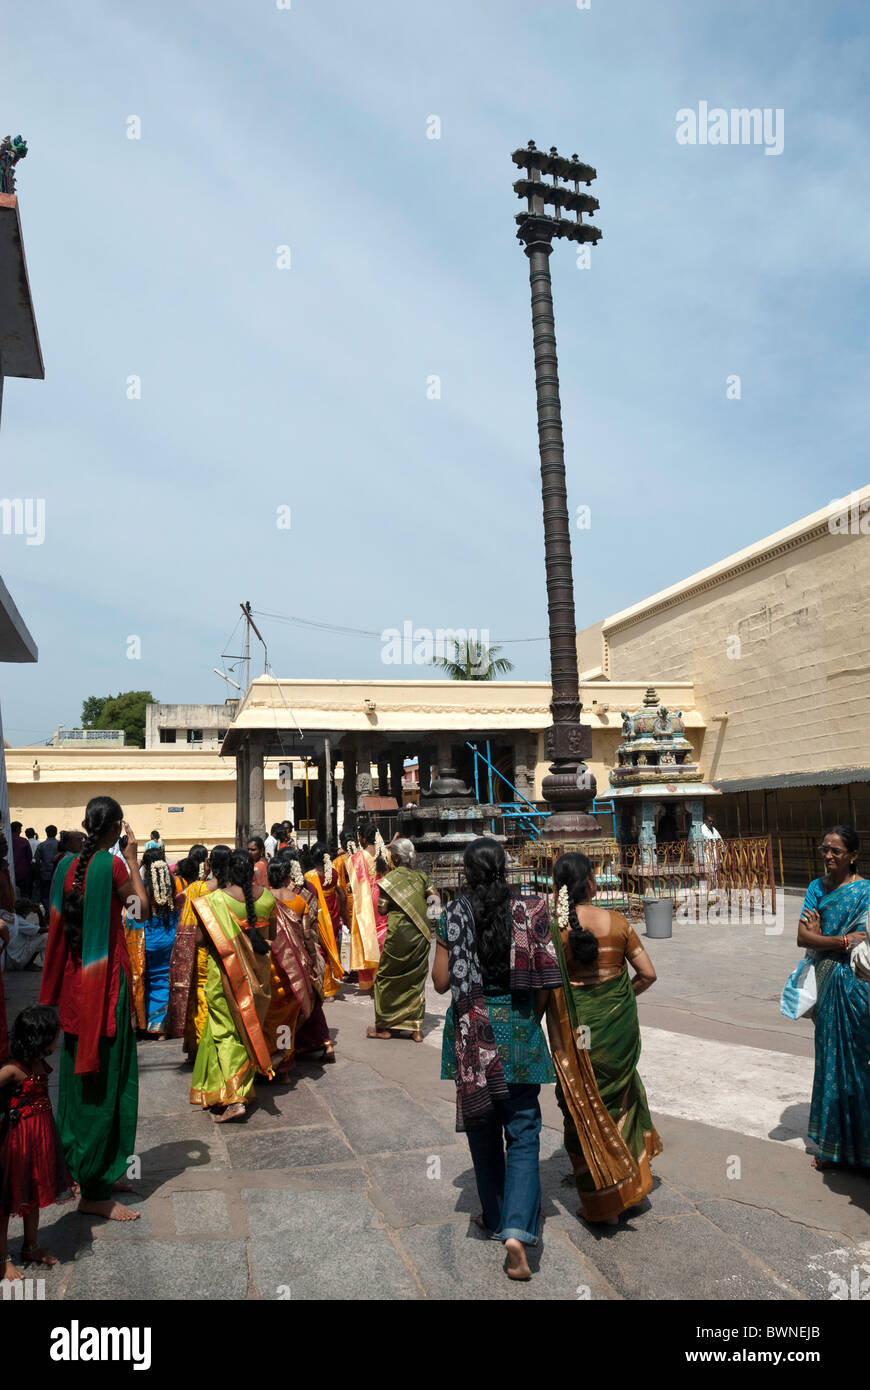 L'Kamakshi Amman Temple Hindu saivite ; ; ;;Kanchipuram de Kancheepuram, Tamil Nadu.L'Inde.matin Banque D'Images